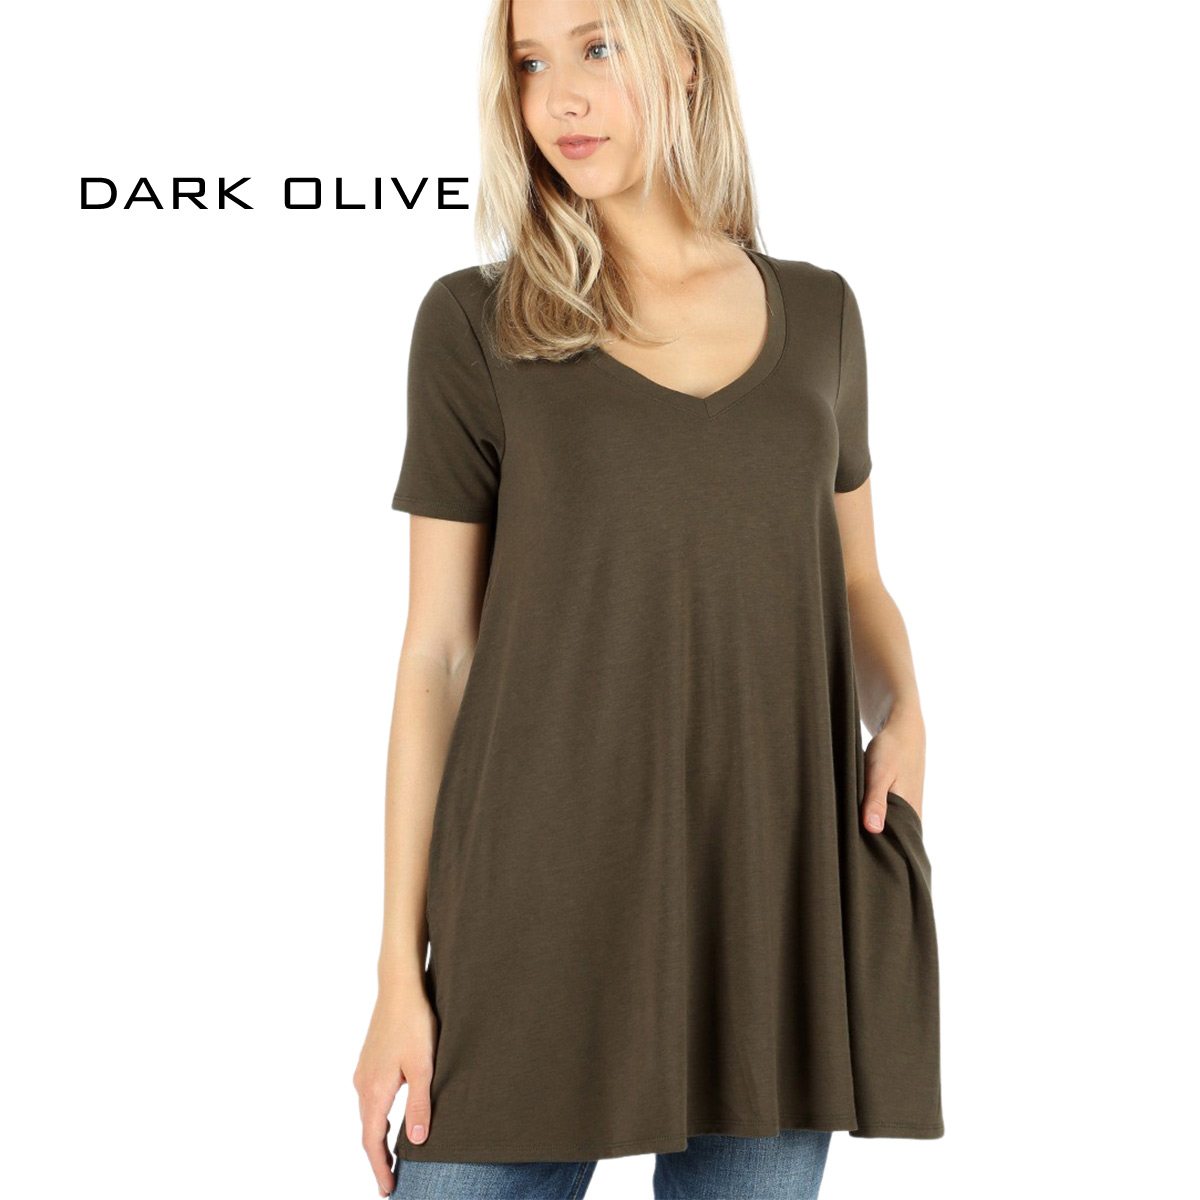 DARK OLIVE Short Sleeve V-Neck Top w/ Pockets 1635